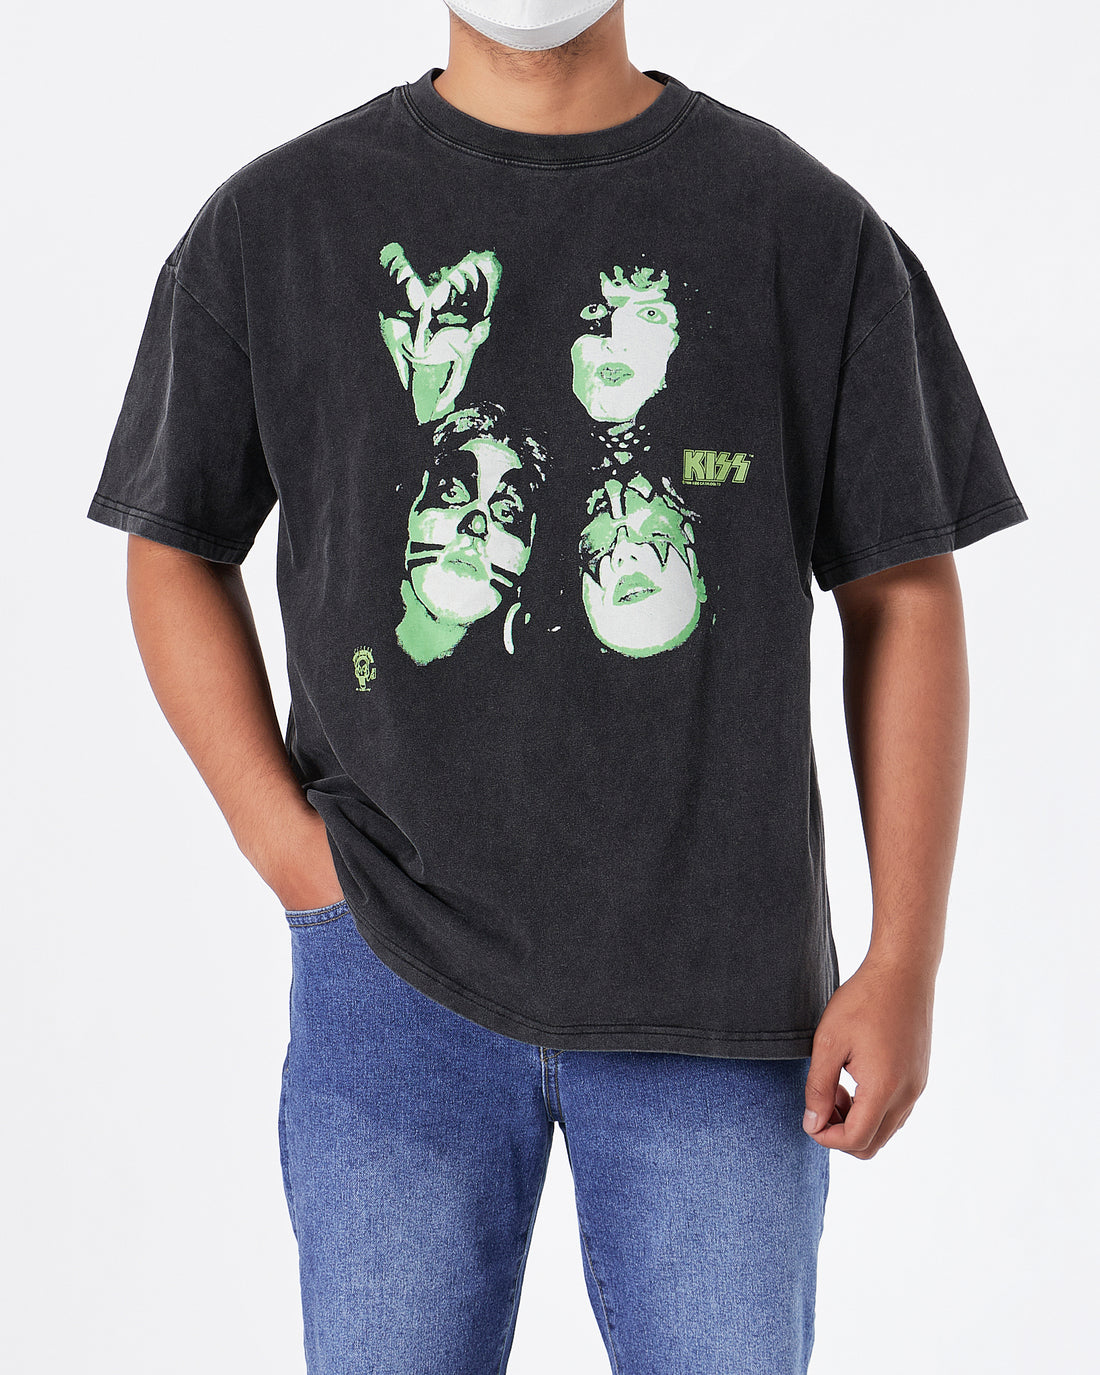 WTL Four Green Face Printed Men Black T-Shirt 19.90